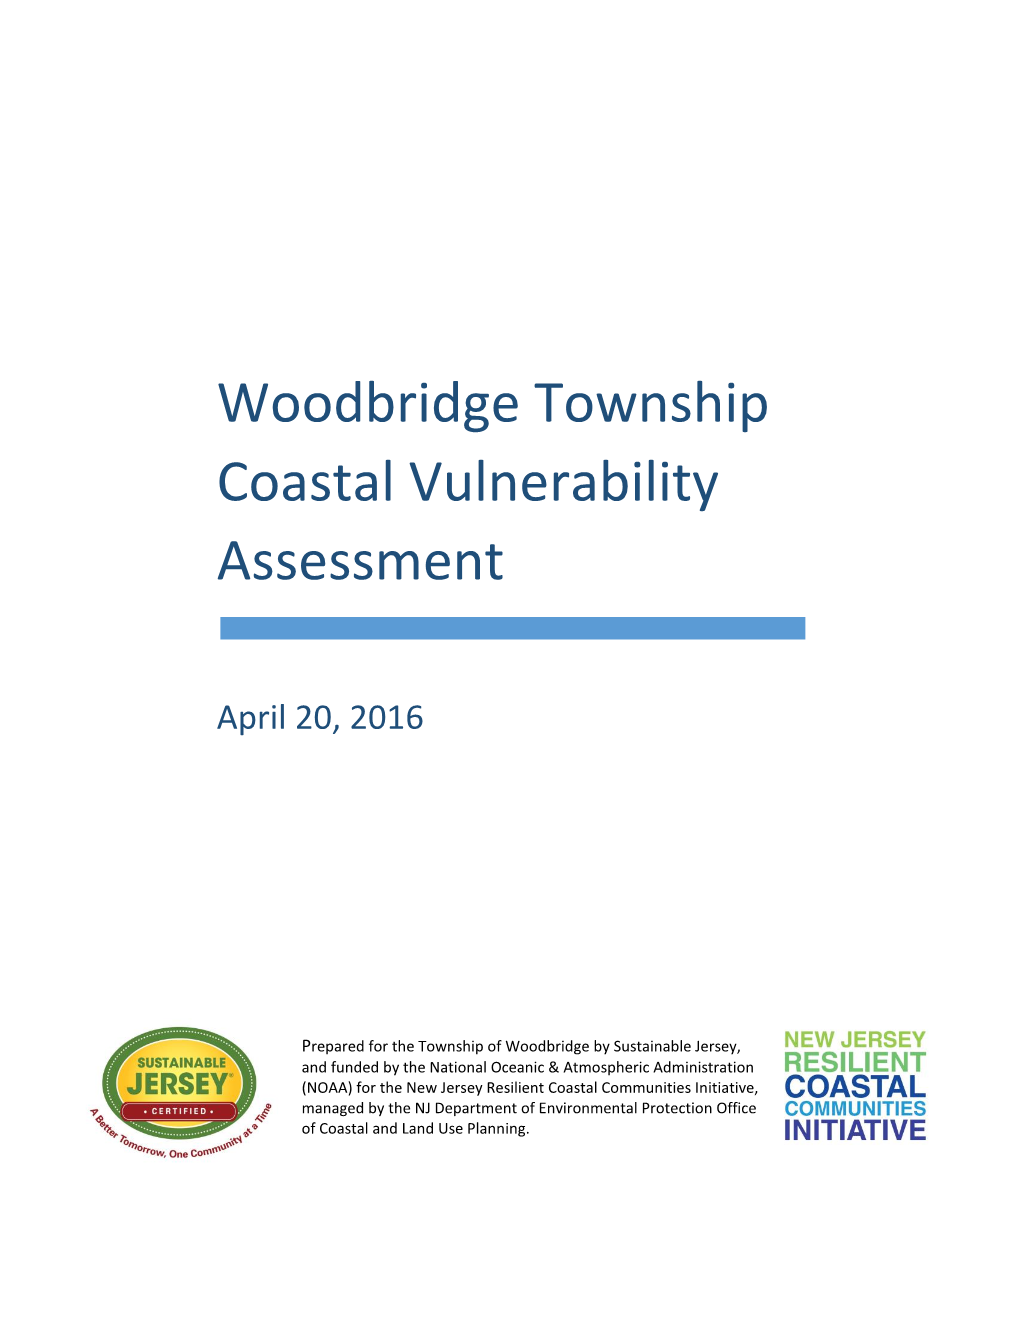 Woodbridge Township Coastal Vulnerability Assessment